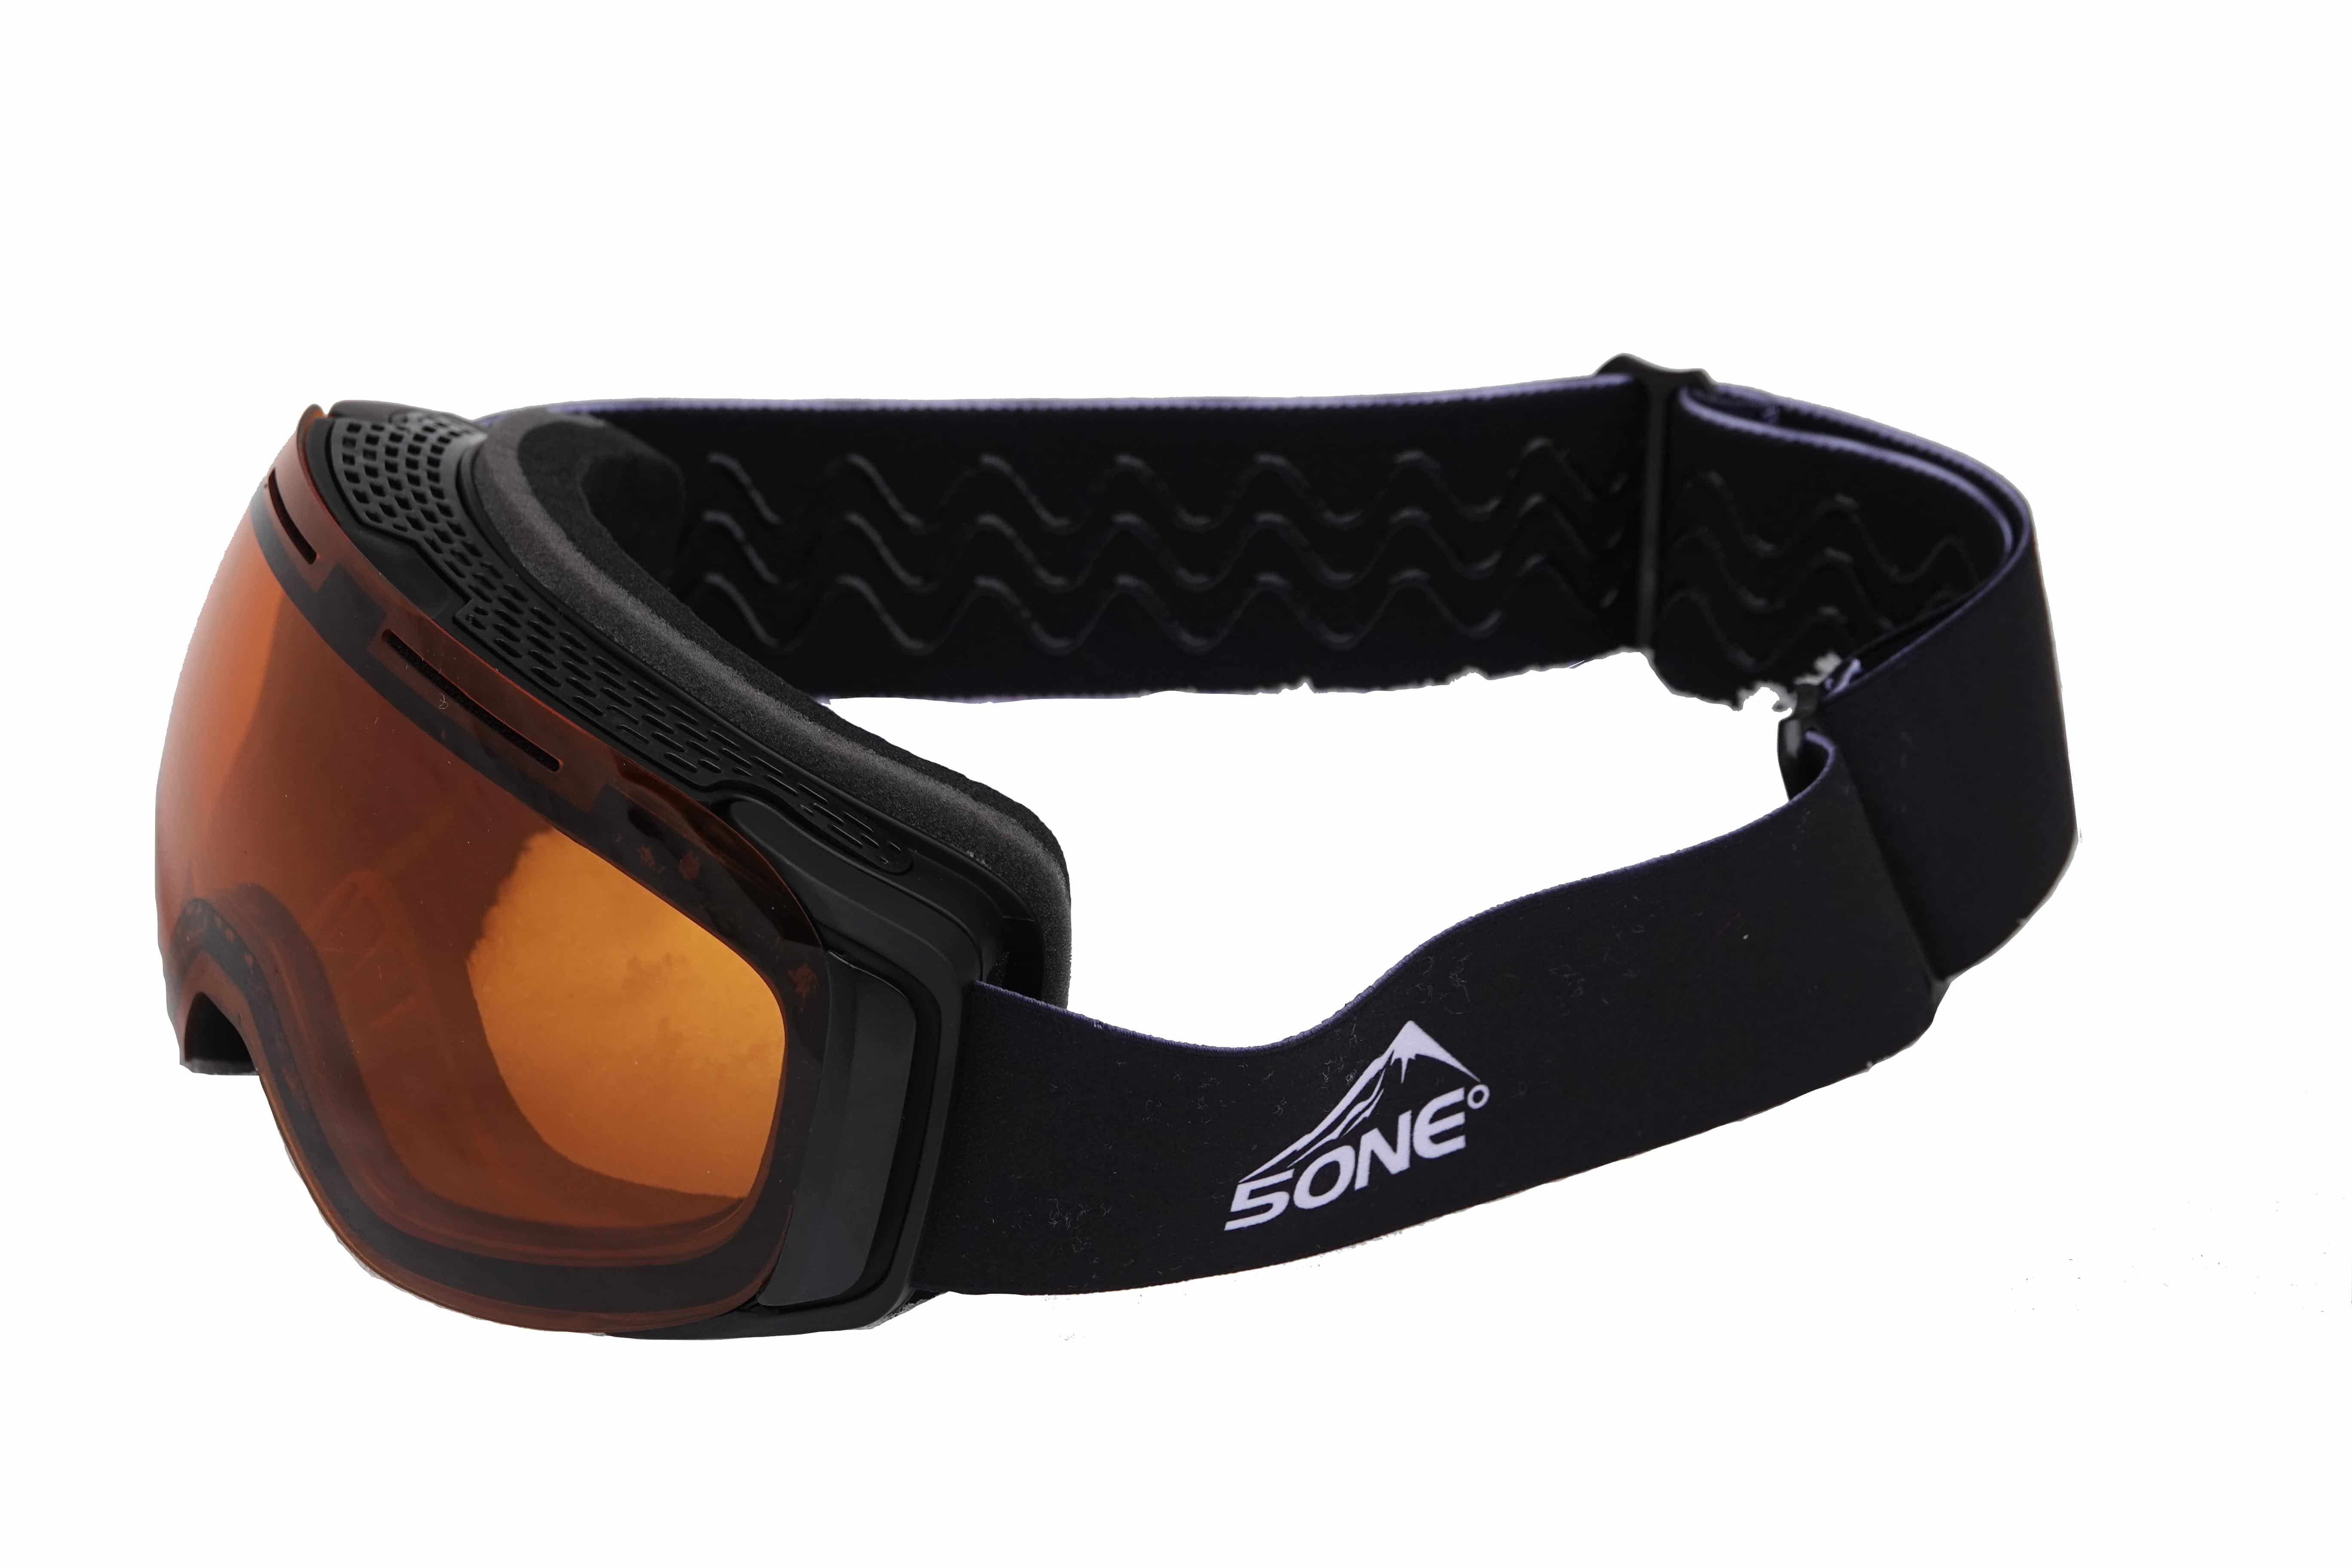 5one® Alpine 7 - skibril - 2 verwisselbare lenzen - Oranje en Blauw